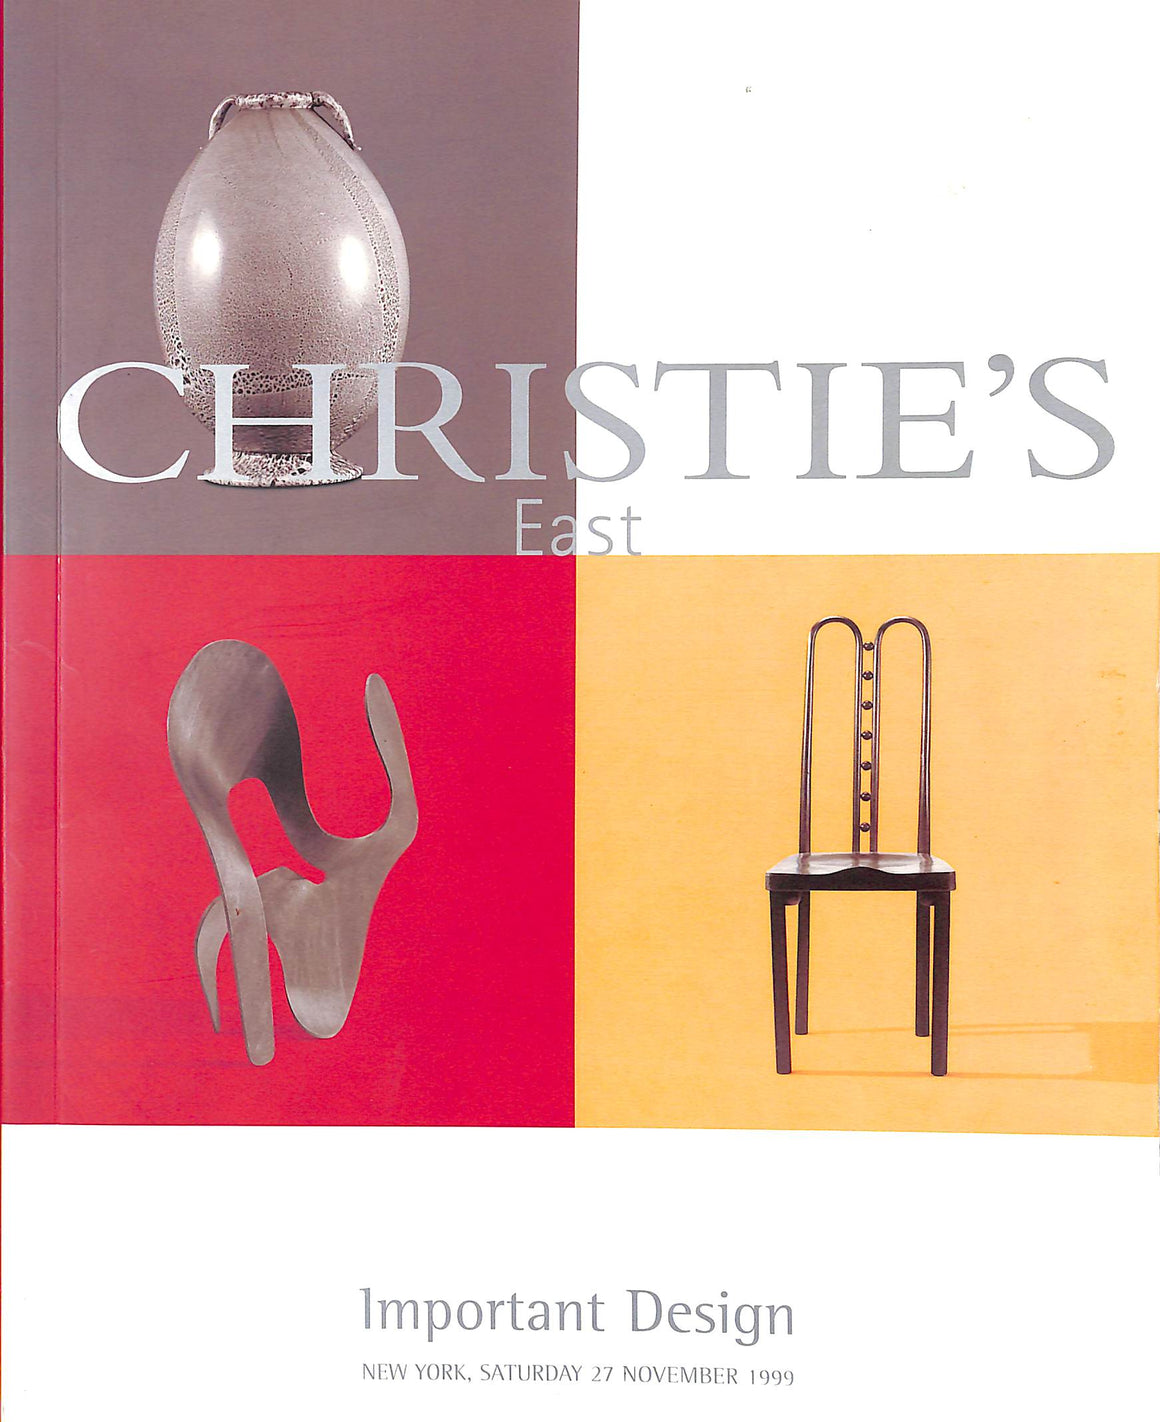 "Important Design" - 27 November 1999 Christie's East